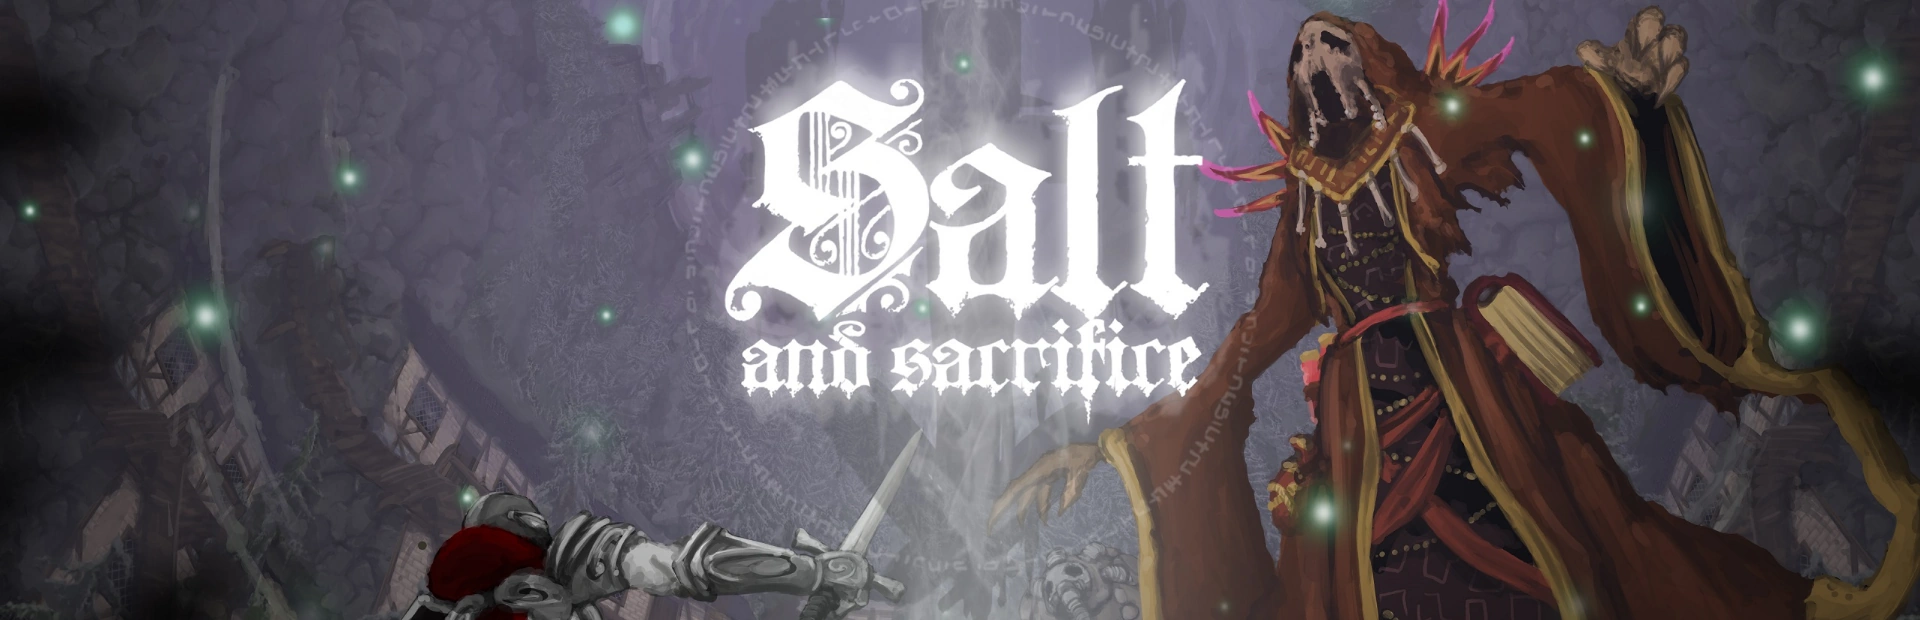 Salt.and .Sacrifice.banner1